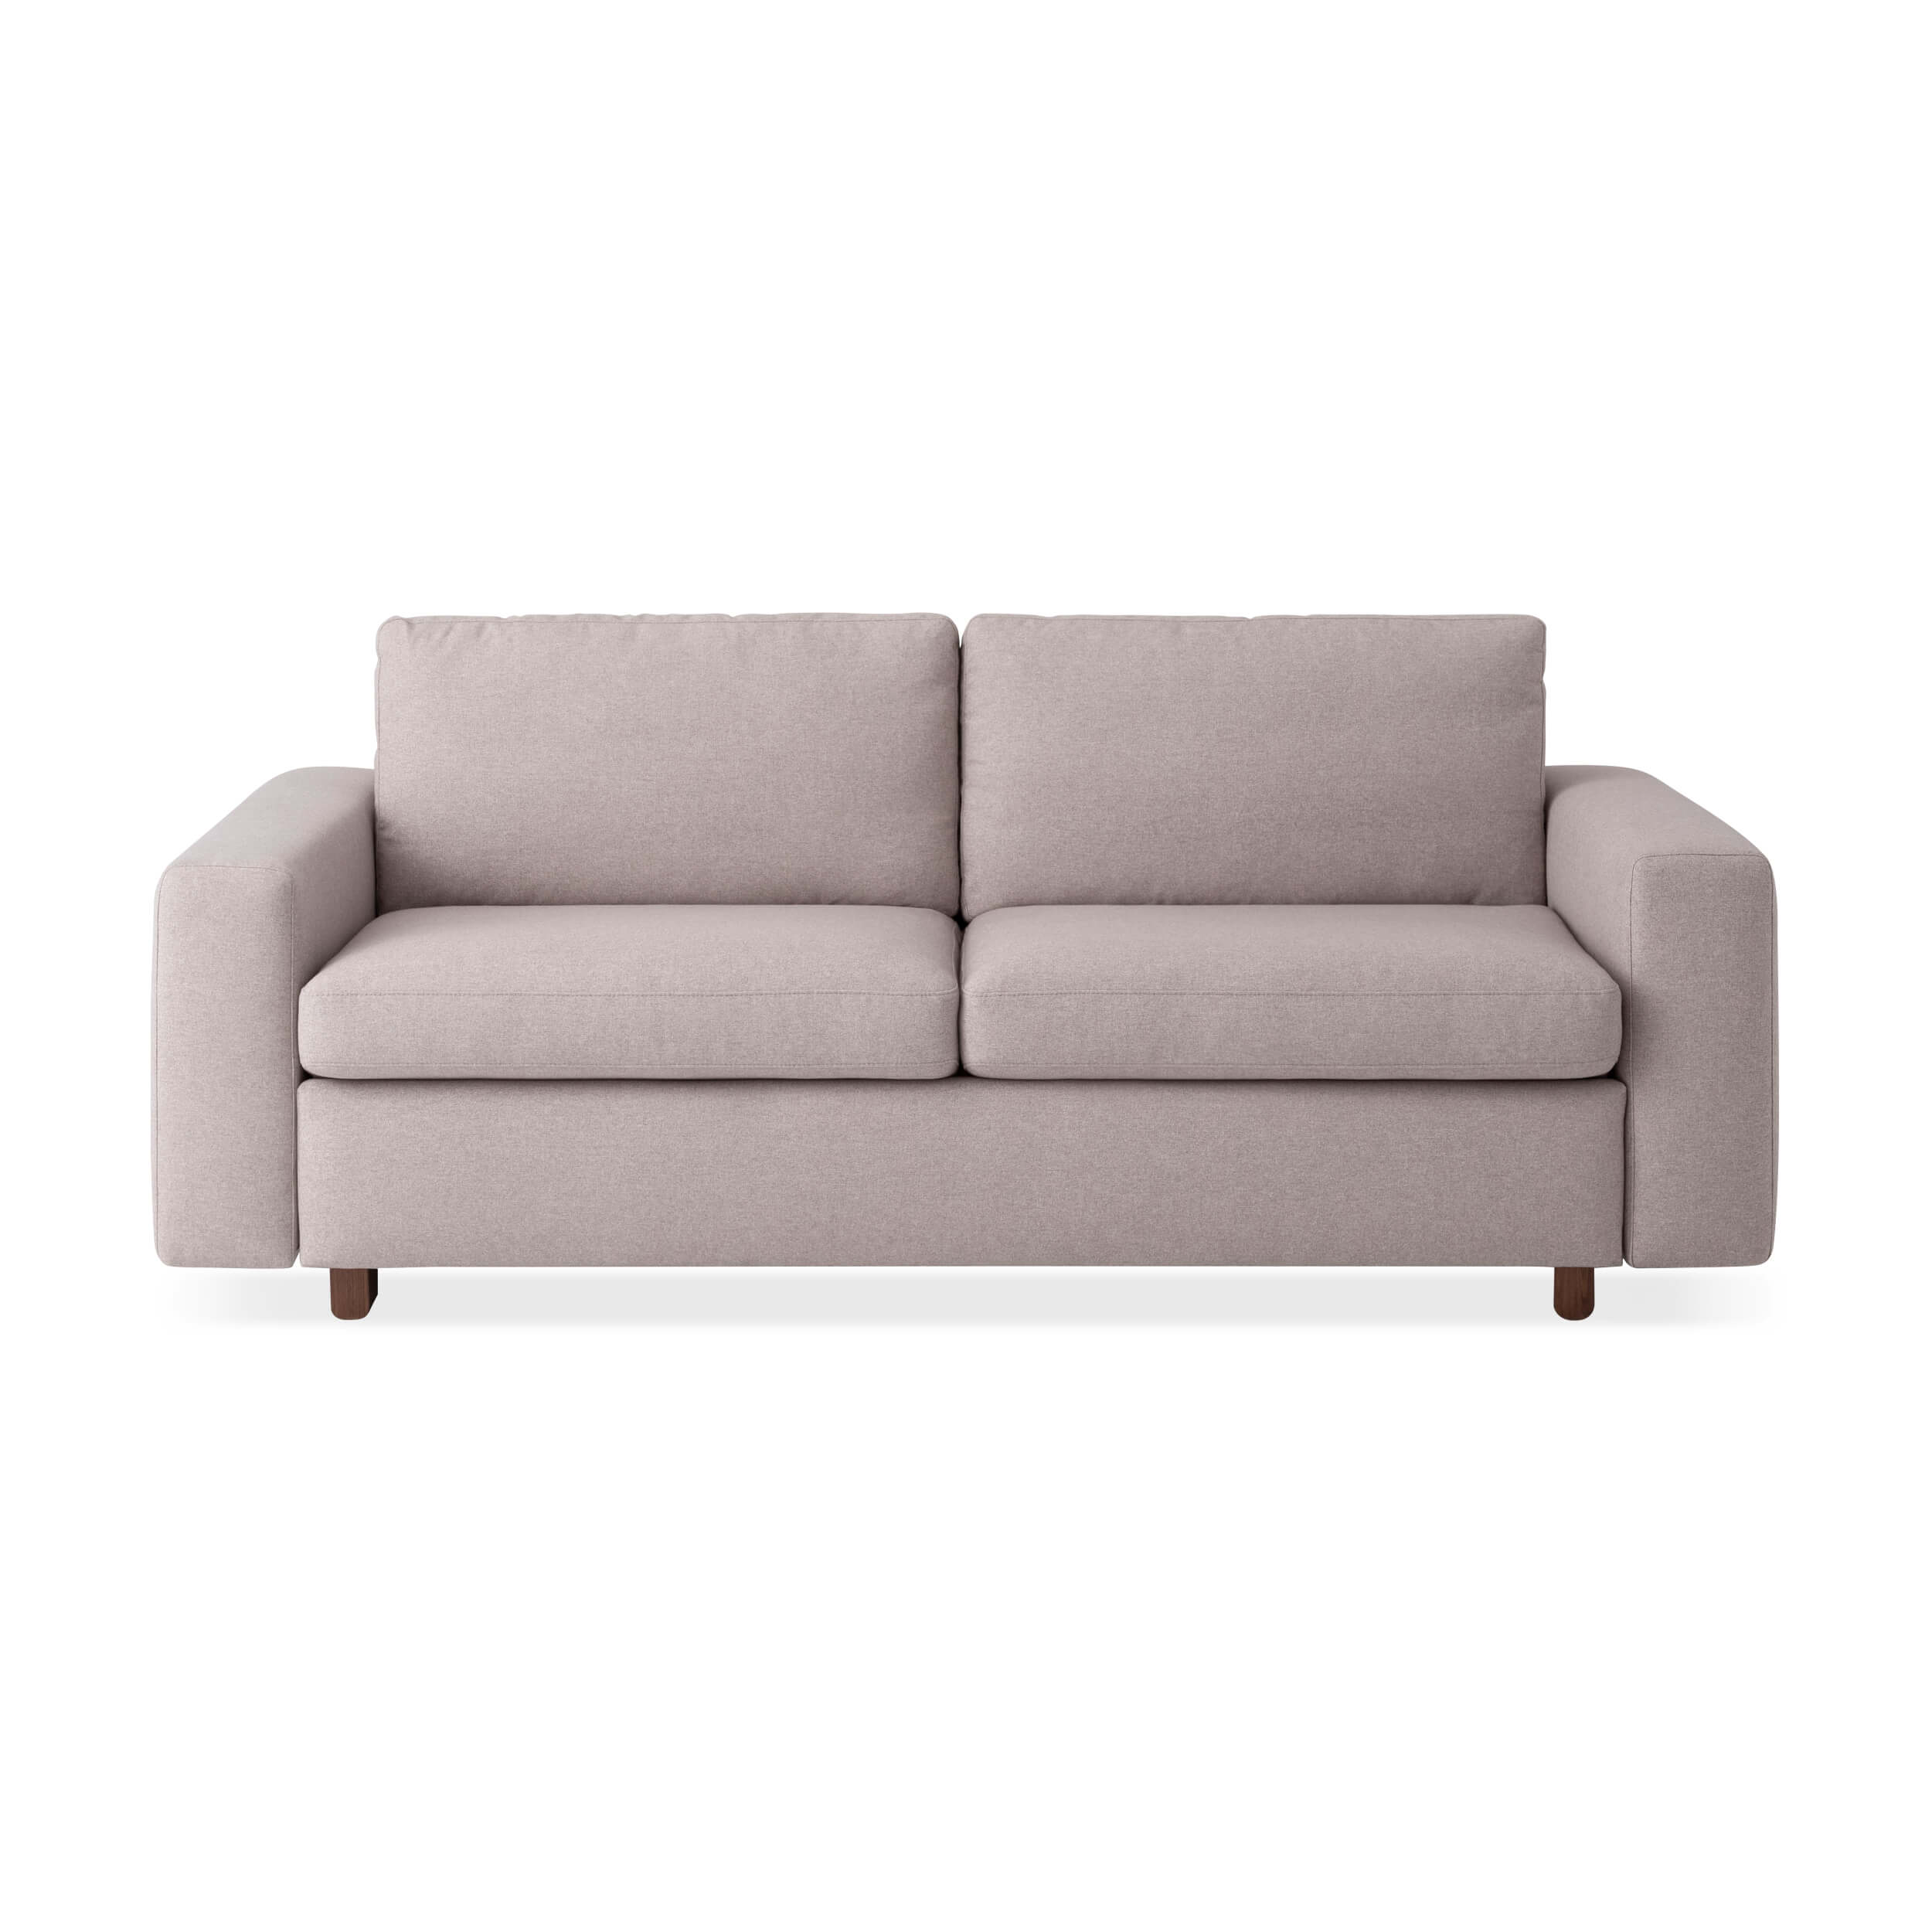 Ithaca bond dispatch Reva Sleeper Sofa | Fabric or Leather Sofa Bed Canada